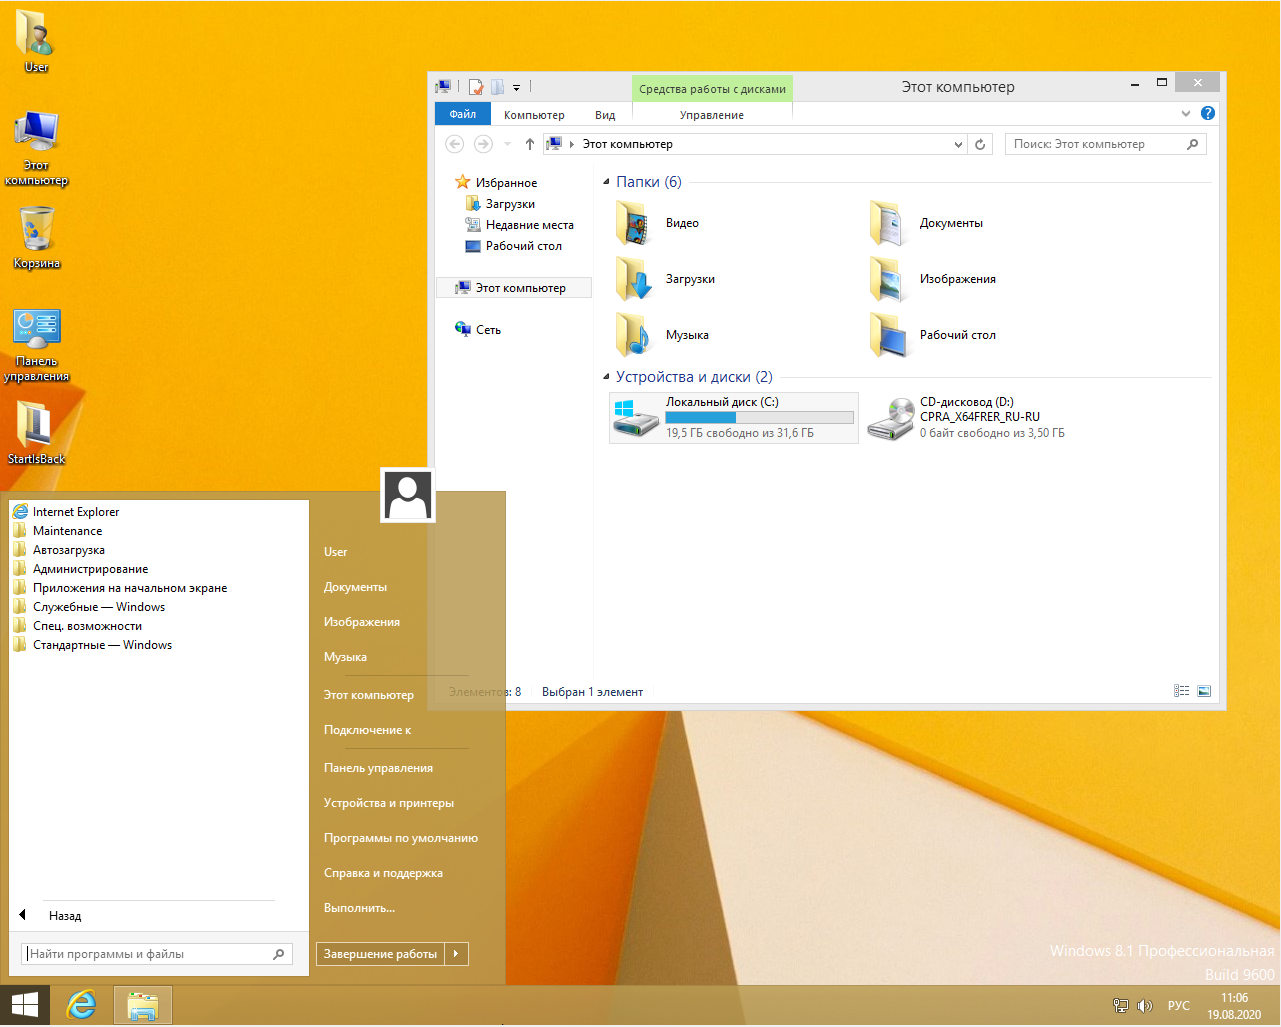   windows 8.1 pro x64 mon edition 1 01.iso